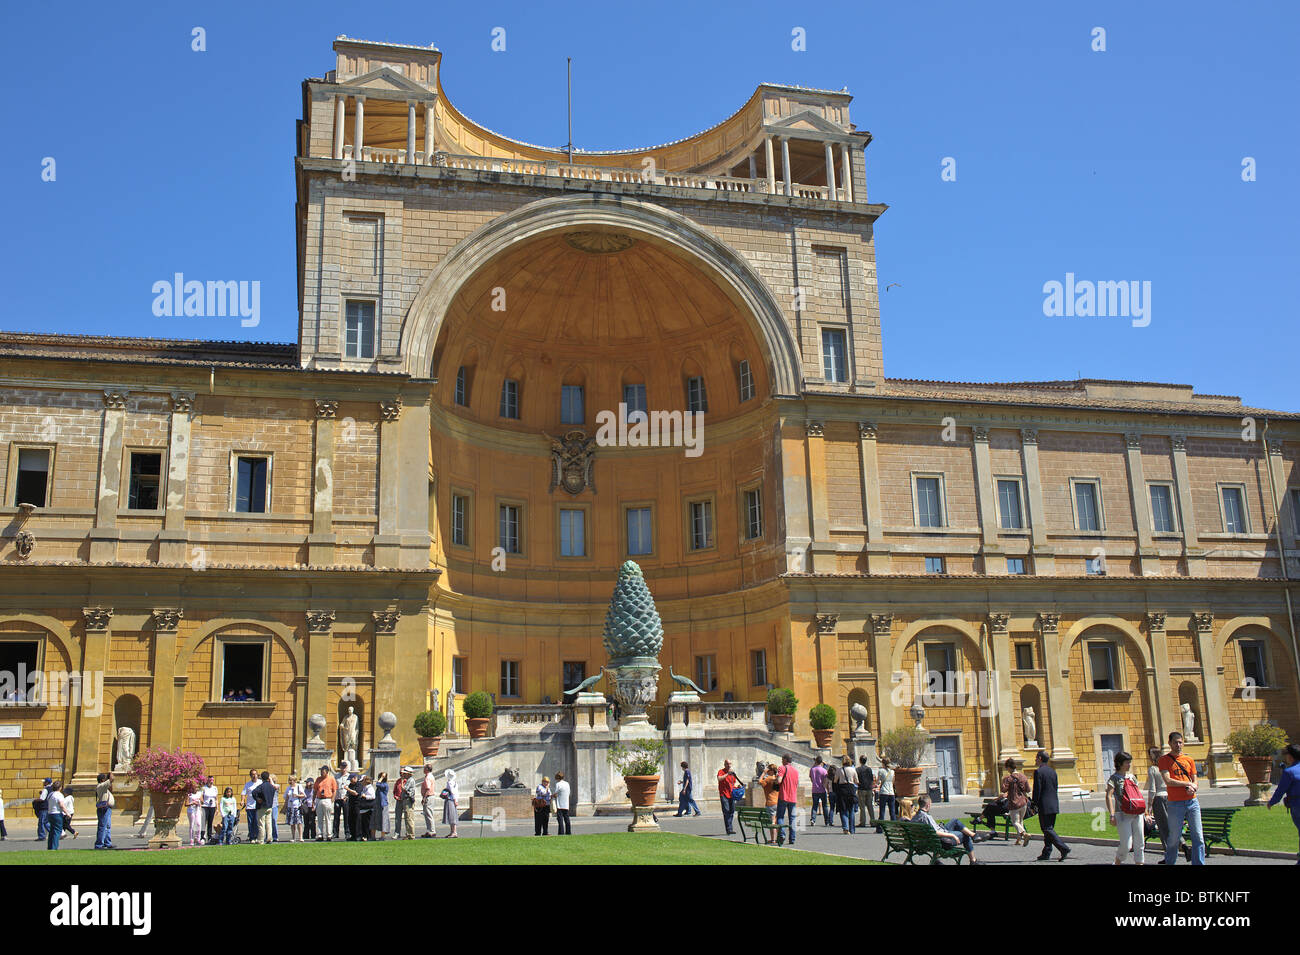 Belvedere Courtyard in the Vatican City - Vatican State Editorial